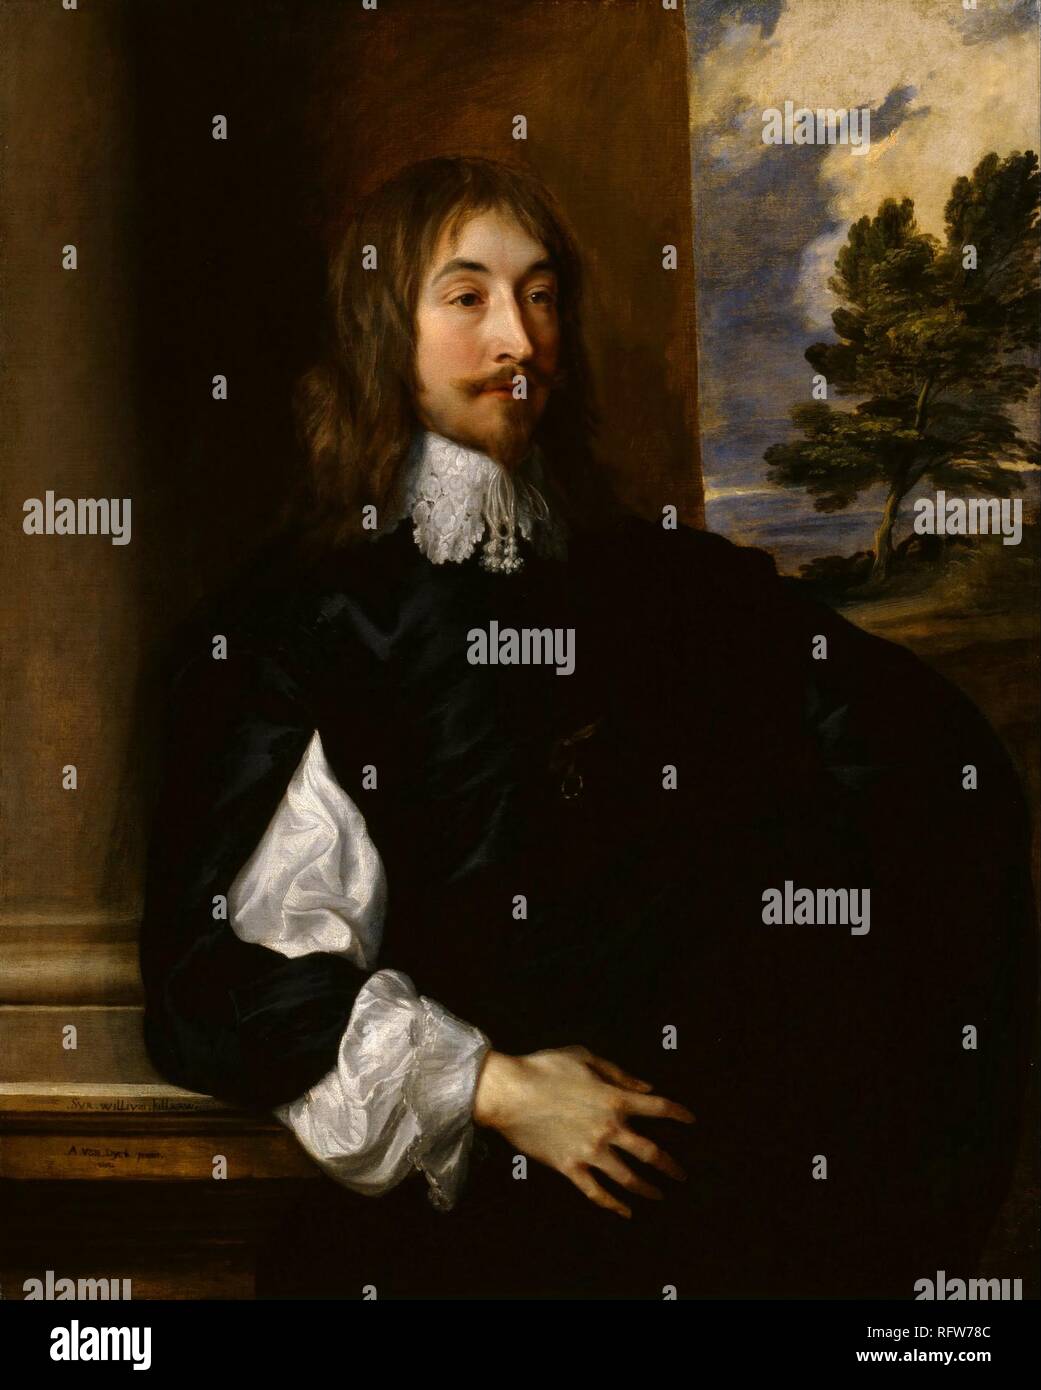 Sir Anthony Van Dyck - Portrait of Sir William Killigrew, Tate Britain.jpeg - RFW78C Stock Photo